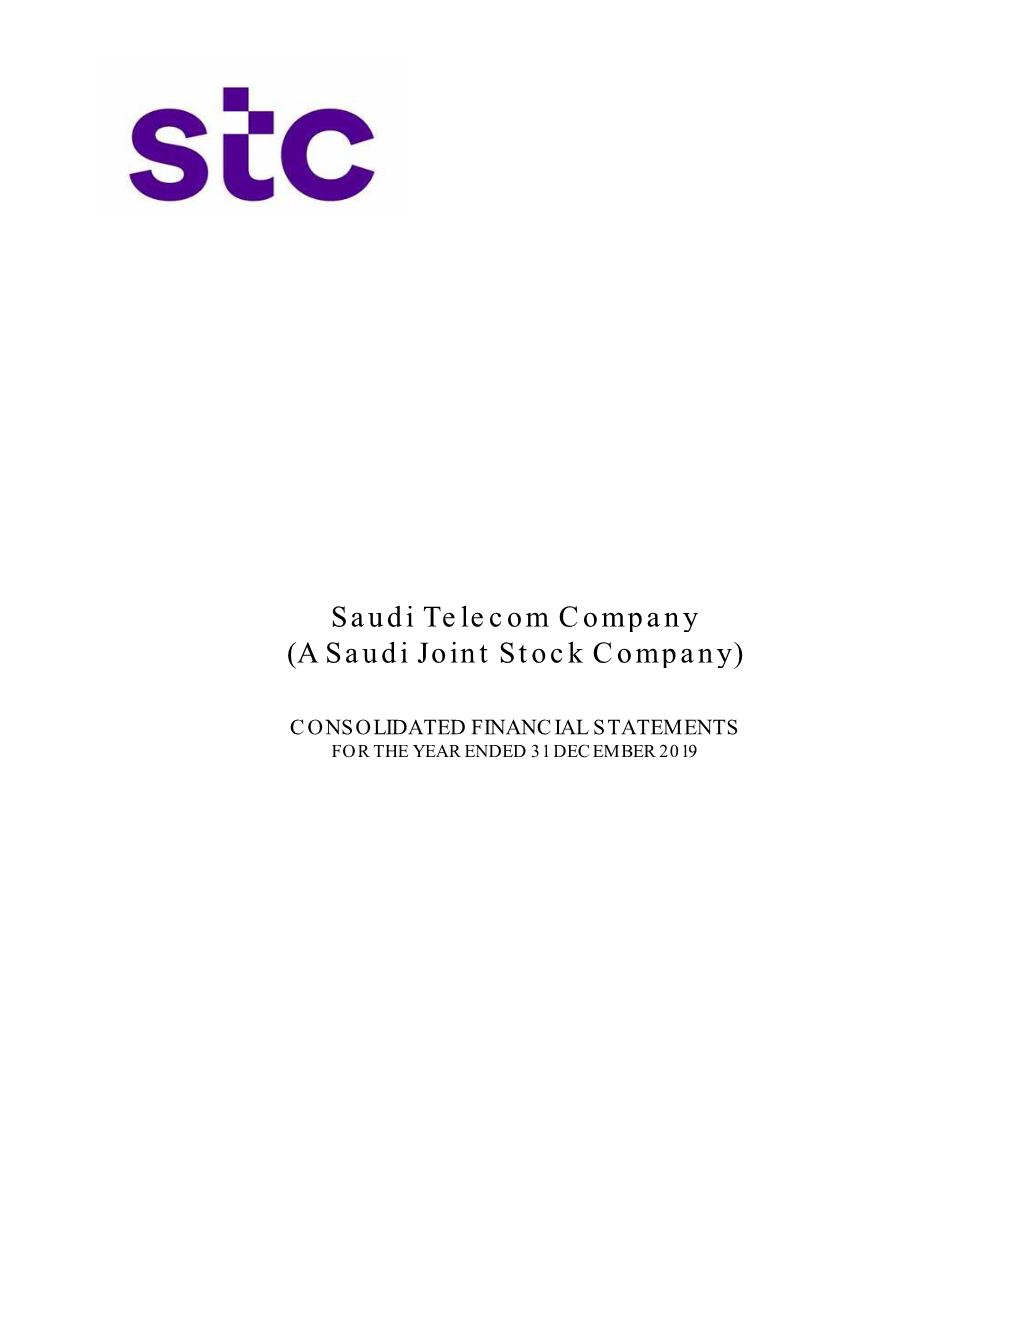 Saudi Telecom Company (A Saudi Joint Stock Company)